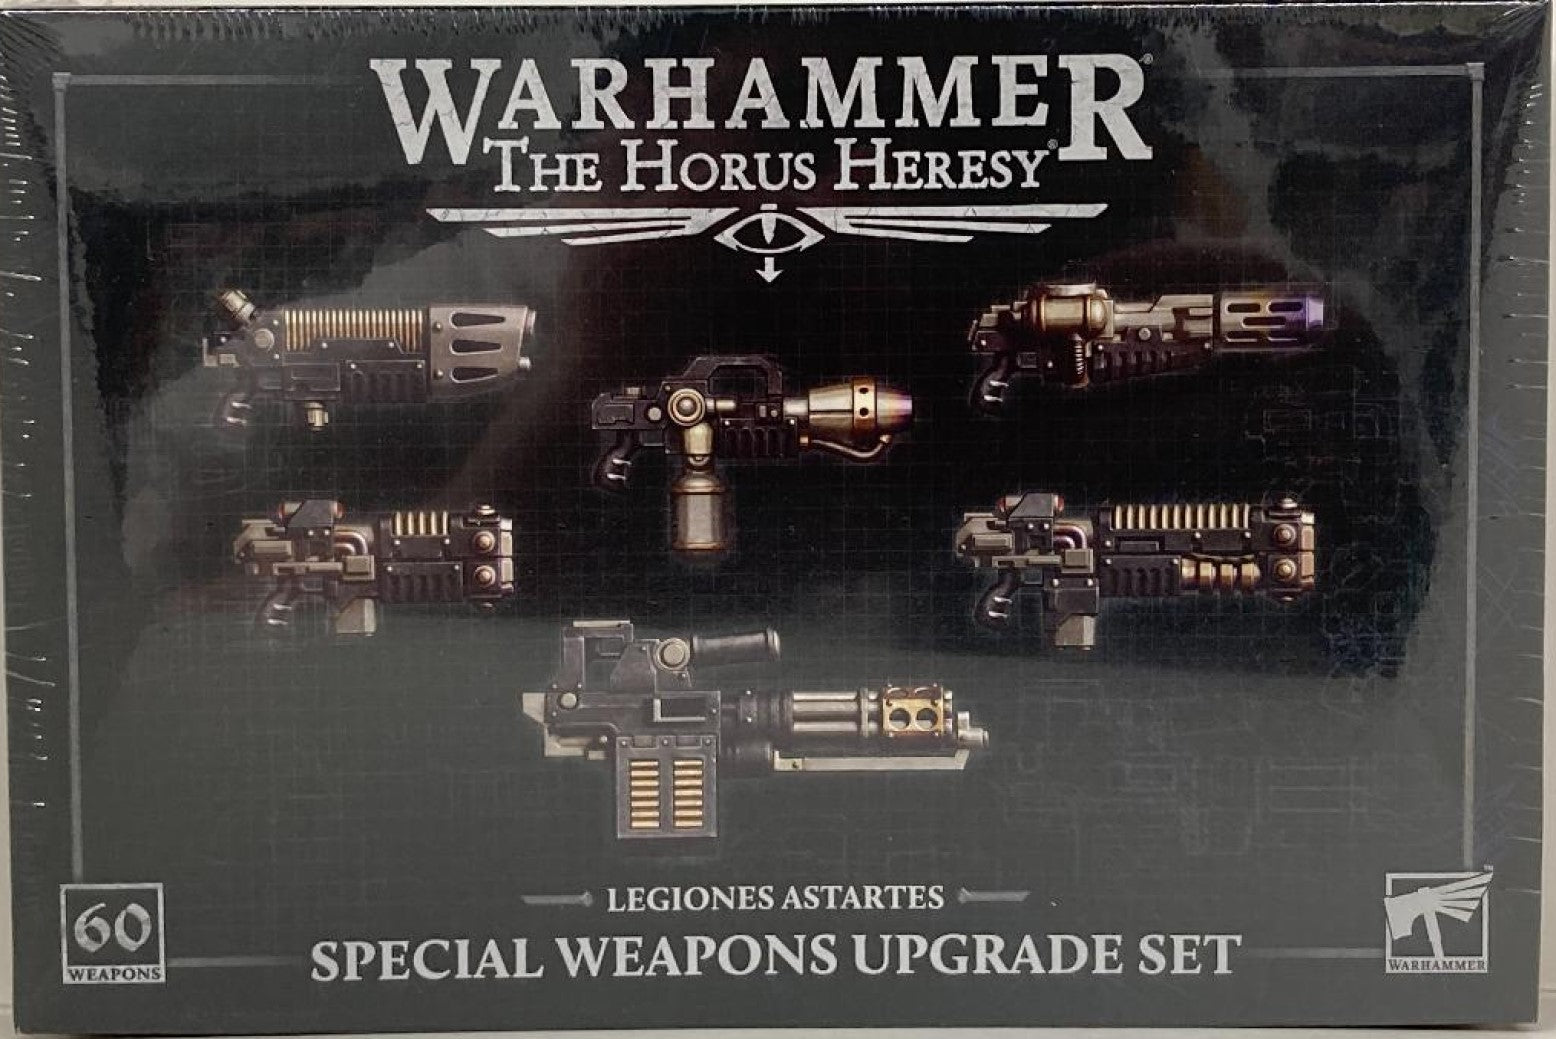 Warhammer The Horus Heresy Legiones Astartes Special Weapons Upgrade Set